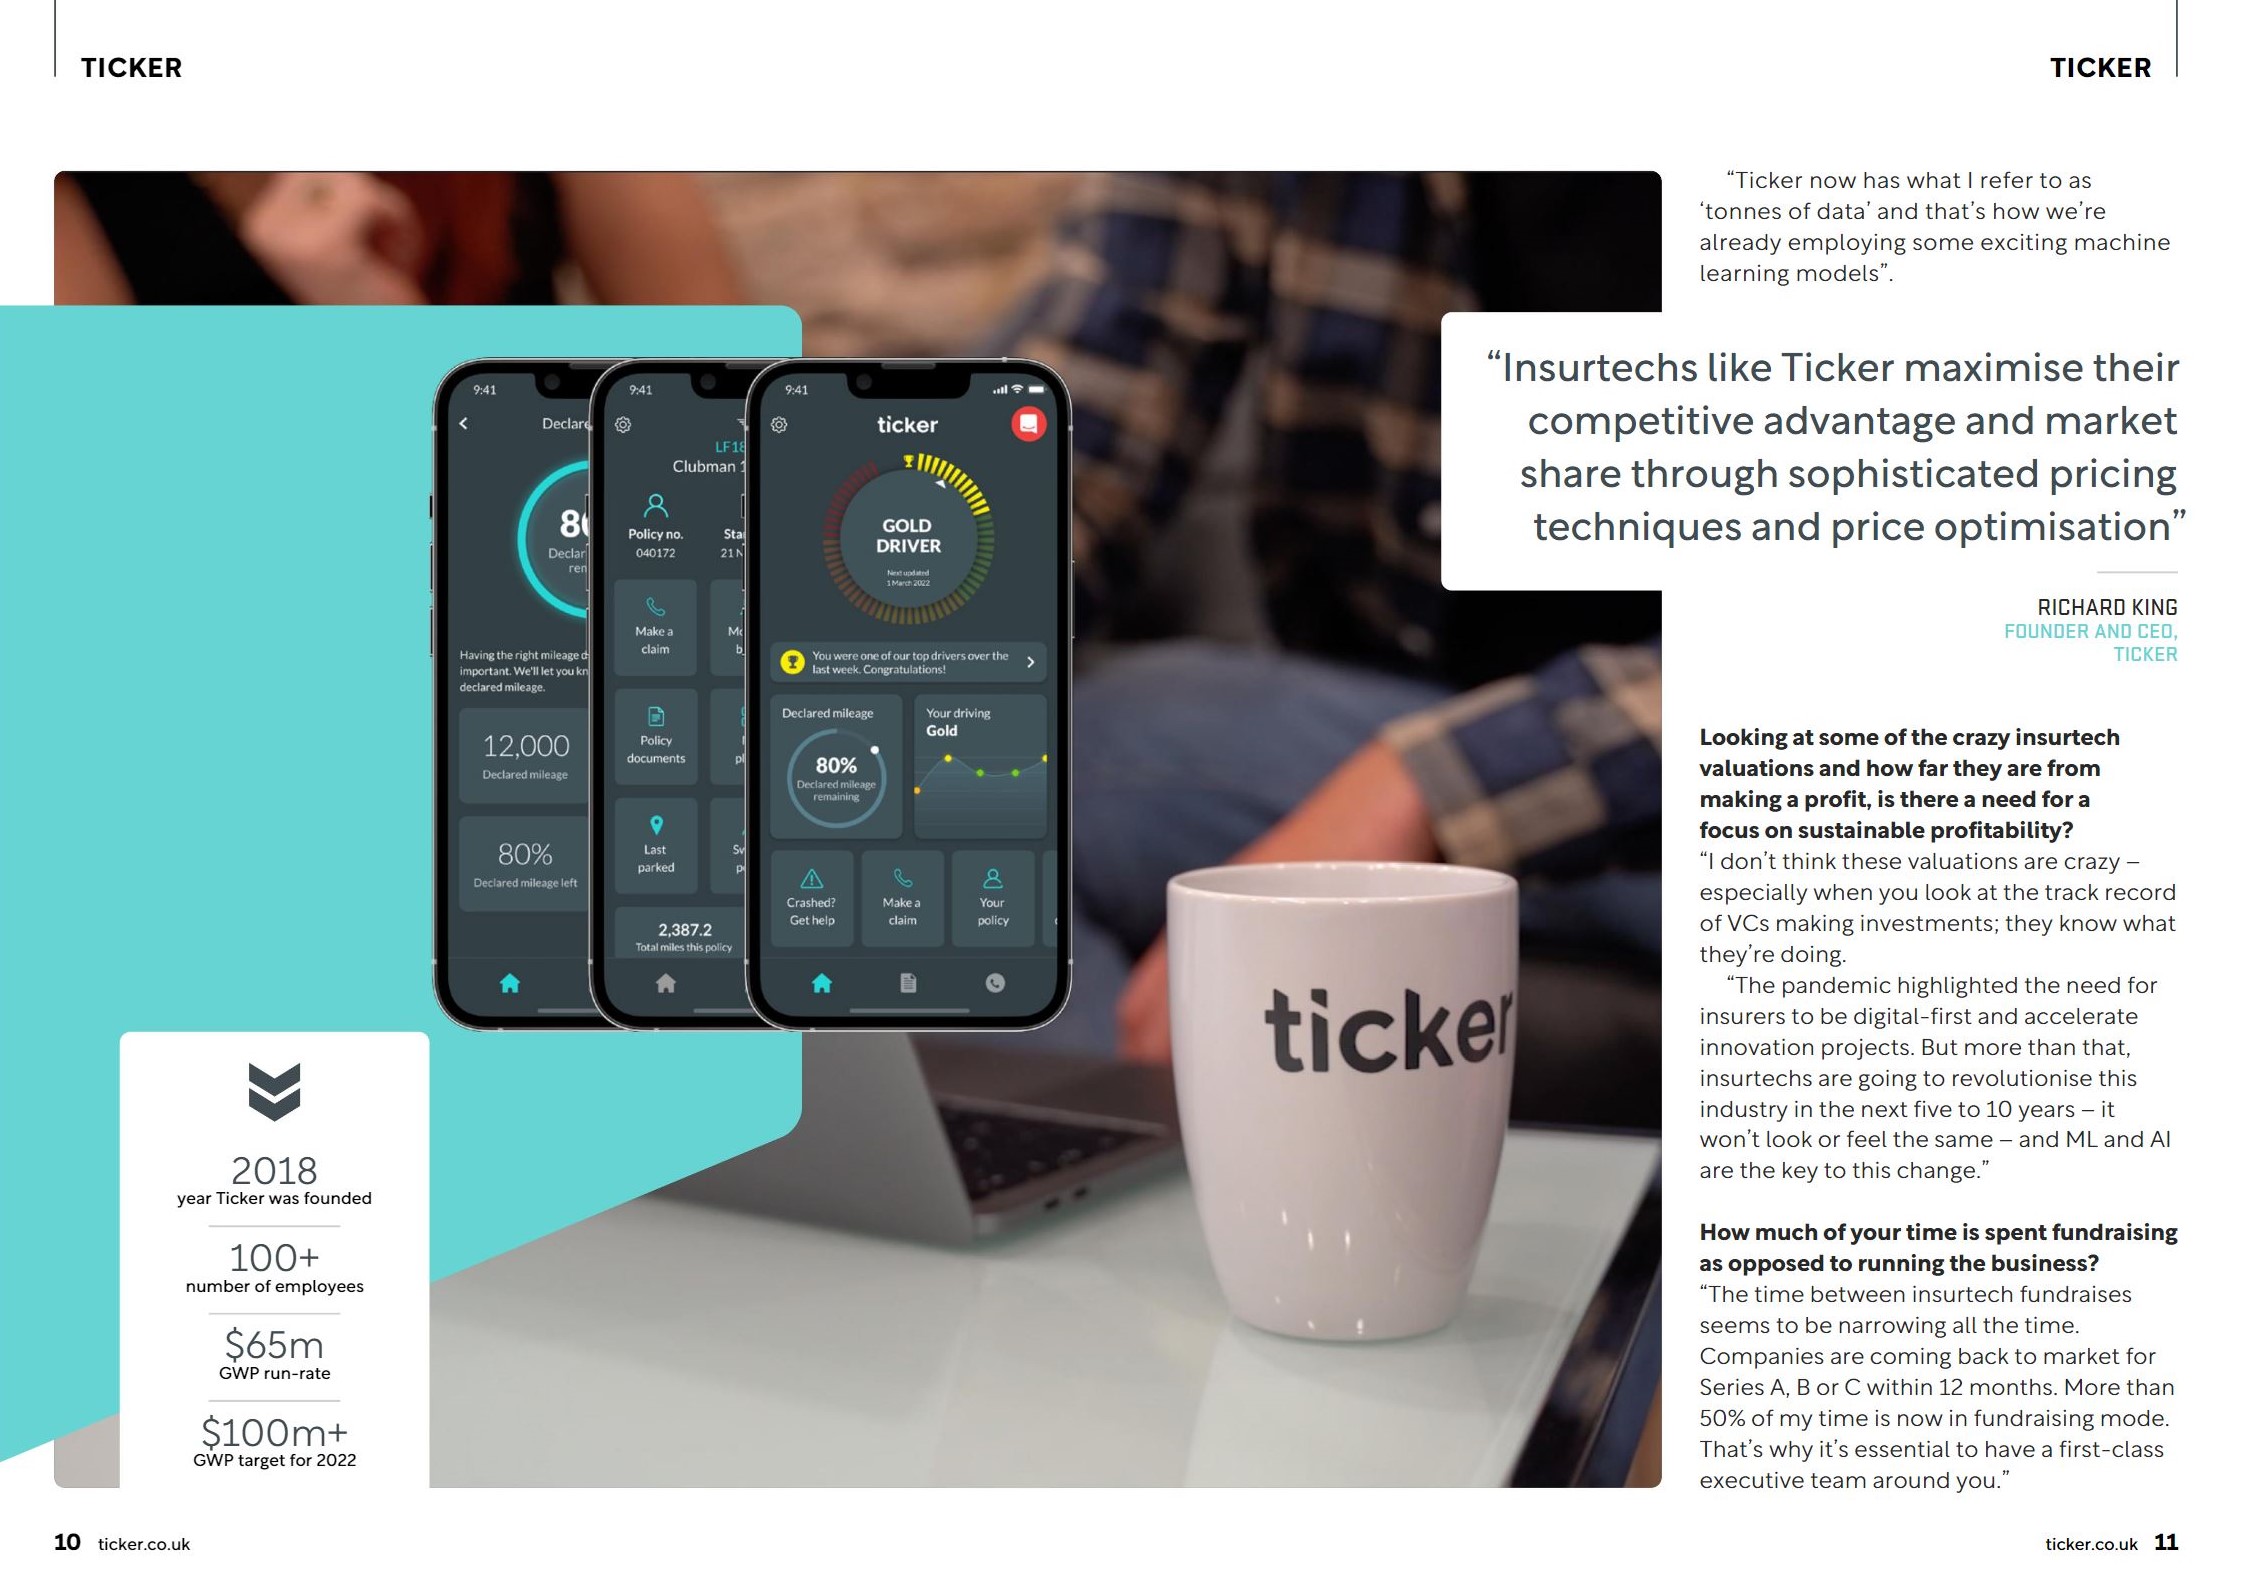 Ticker founder and CEO Richard King interviewed in InsurTech Magazine